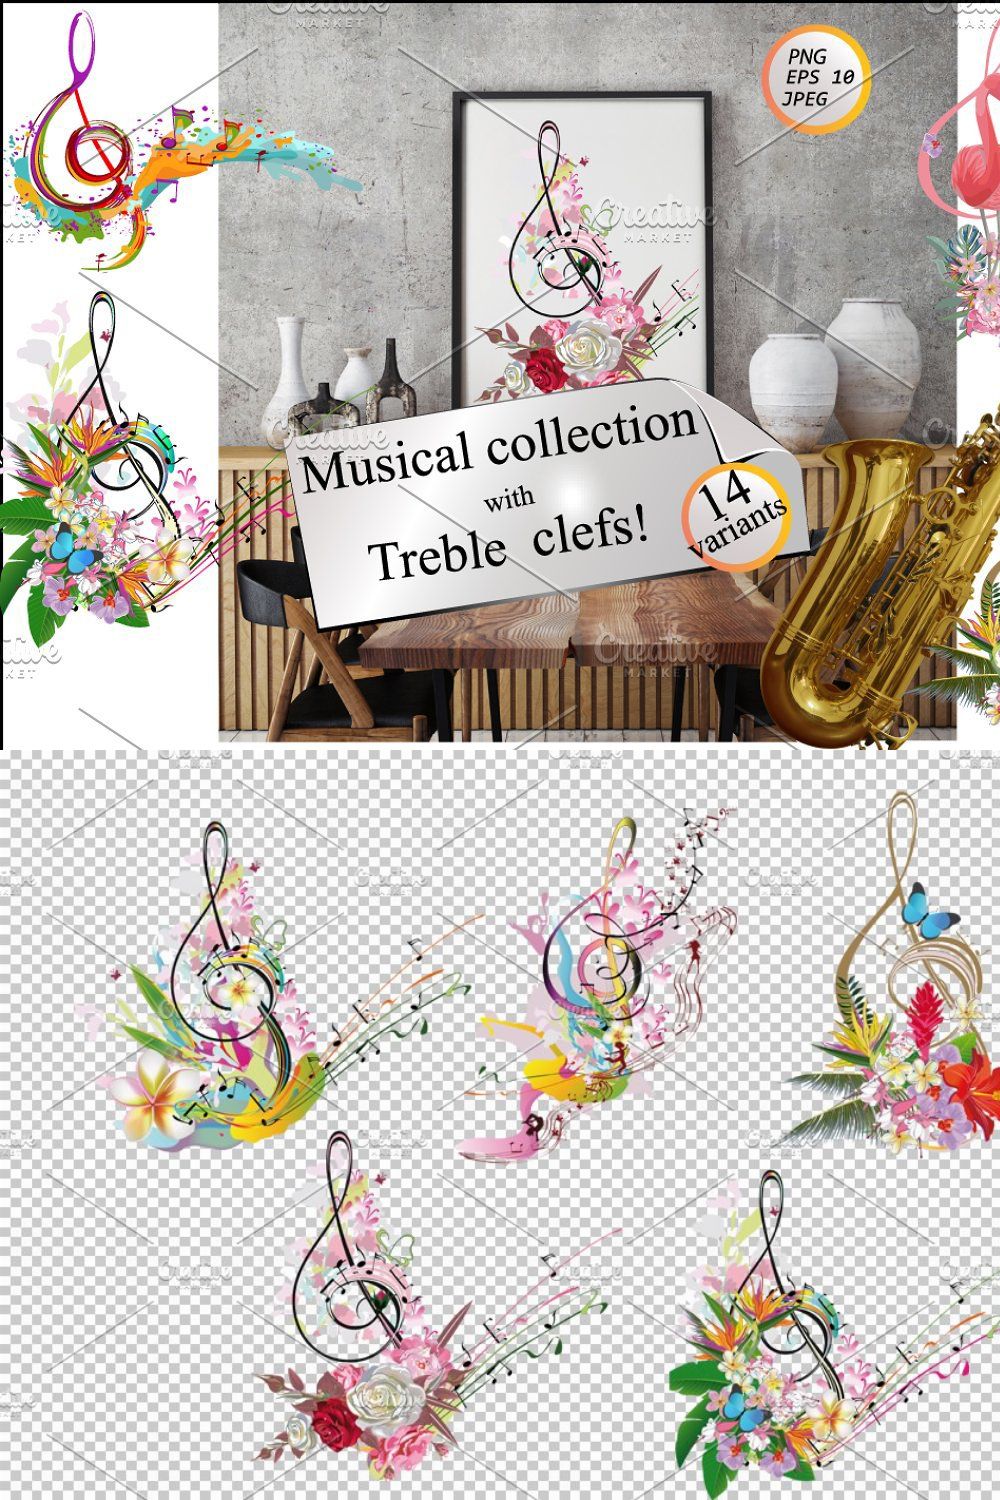 Musical Treble clefs! pinterest preview image.